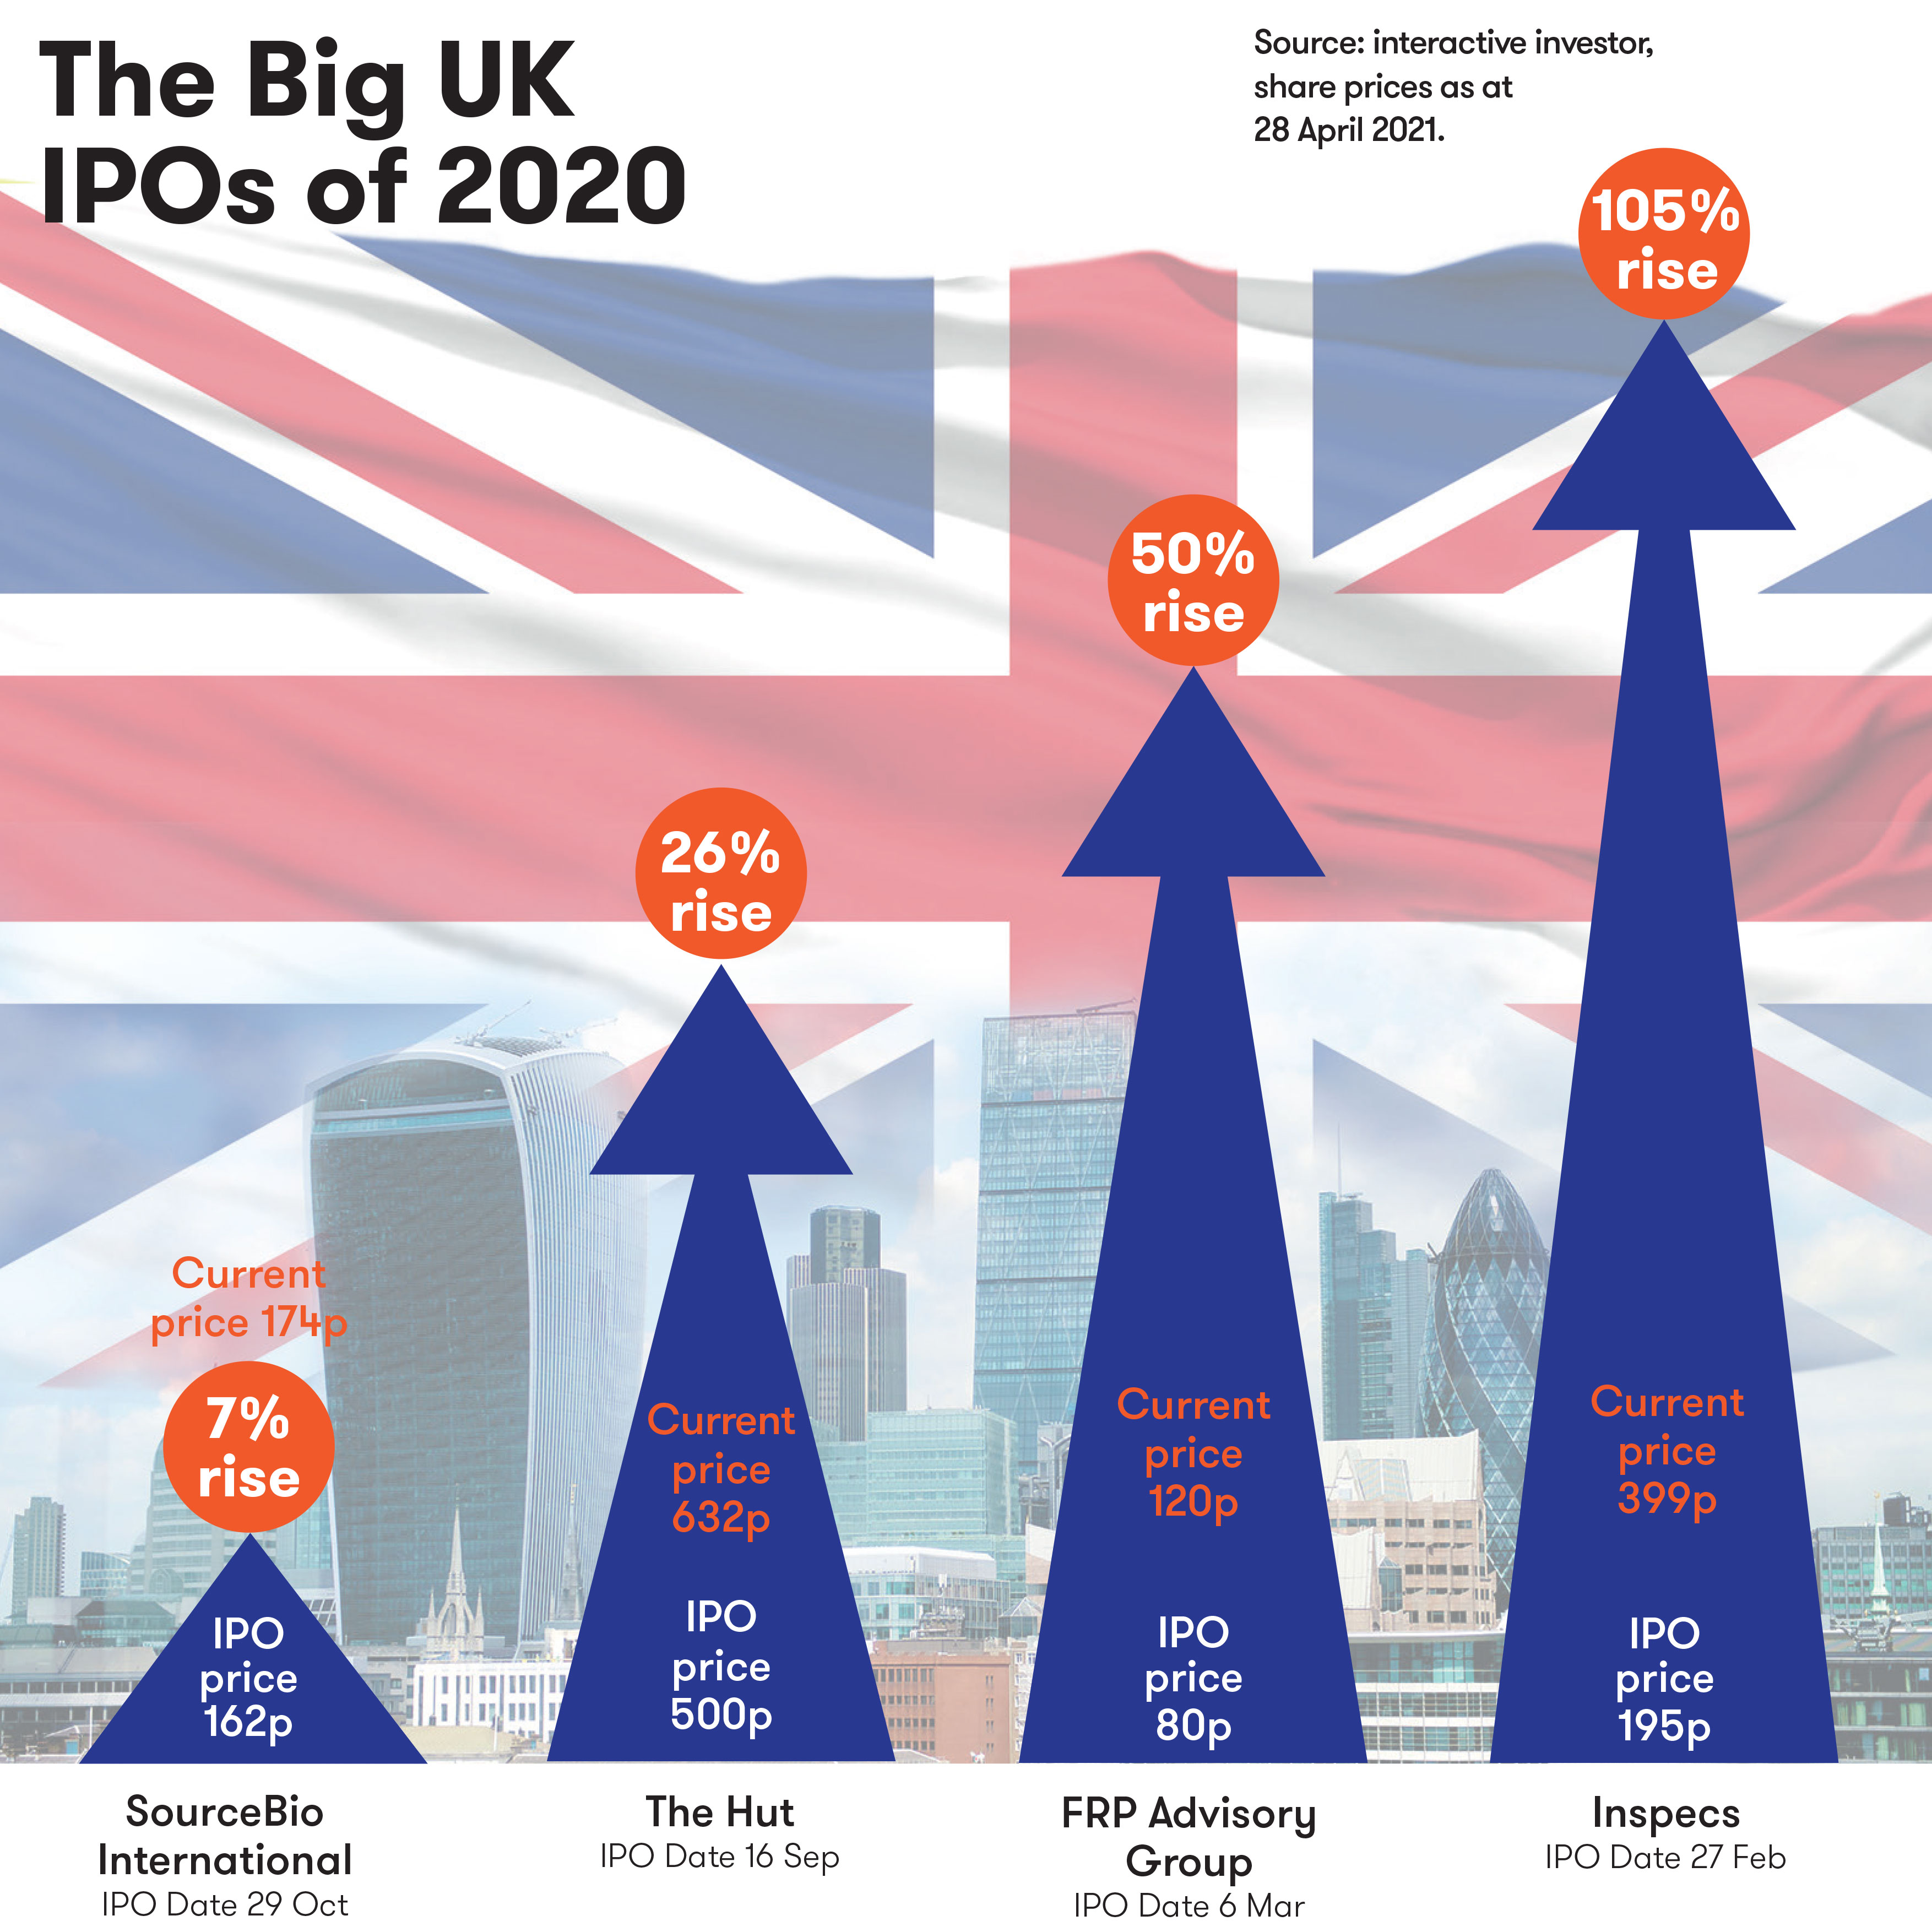 The Big UK IPOs of 2020